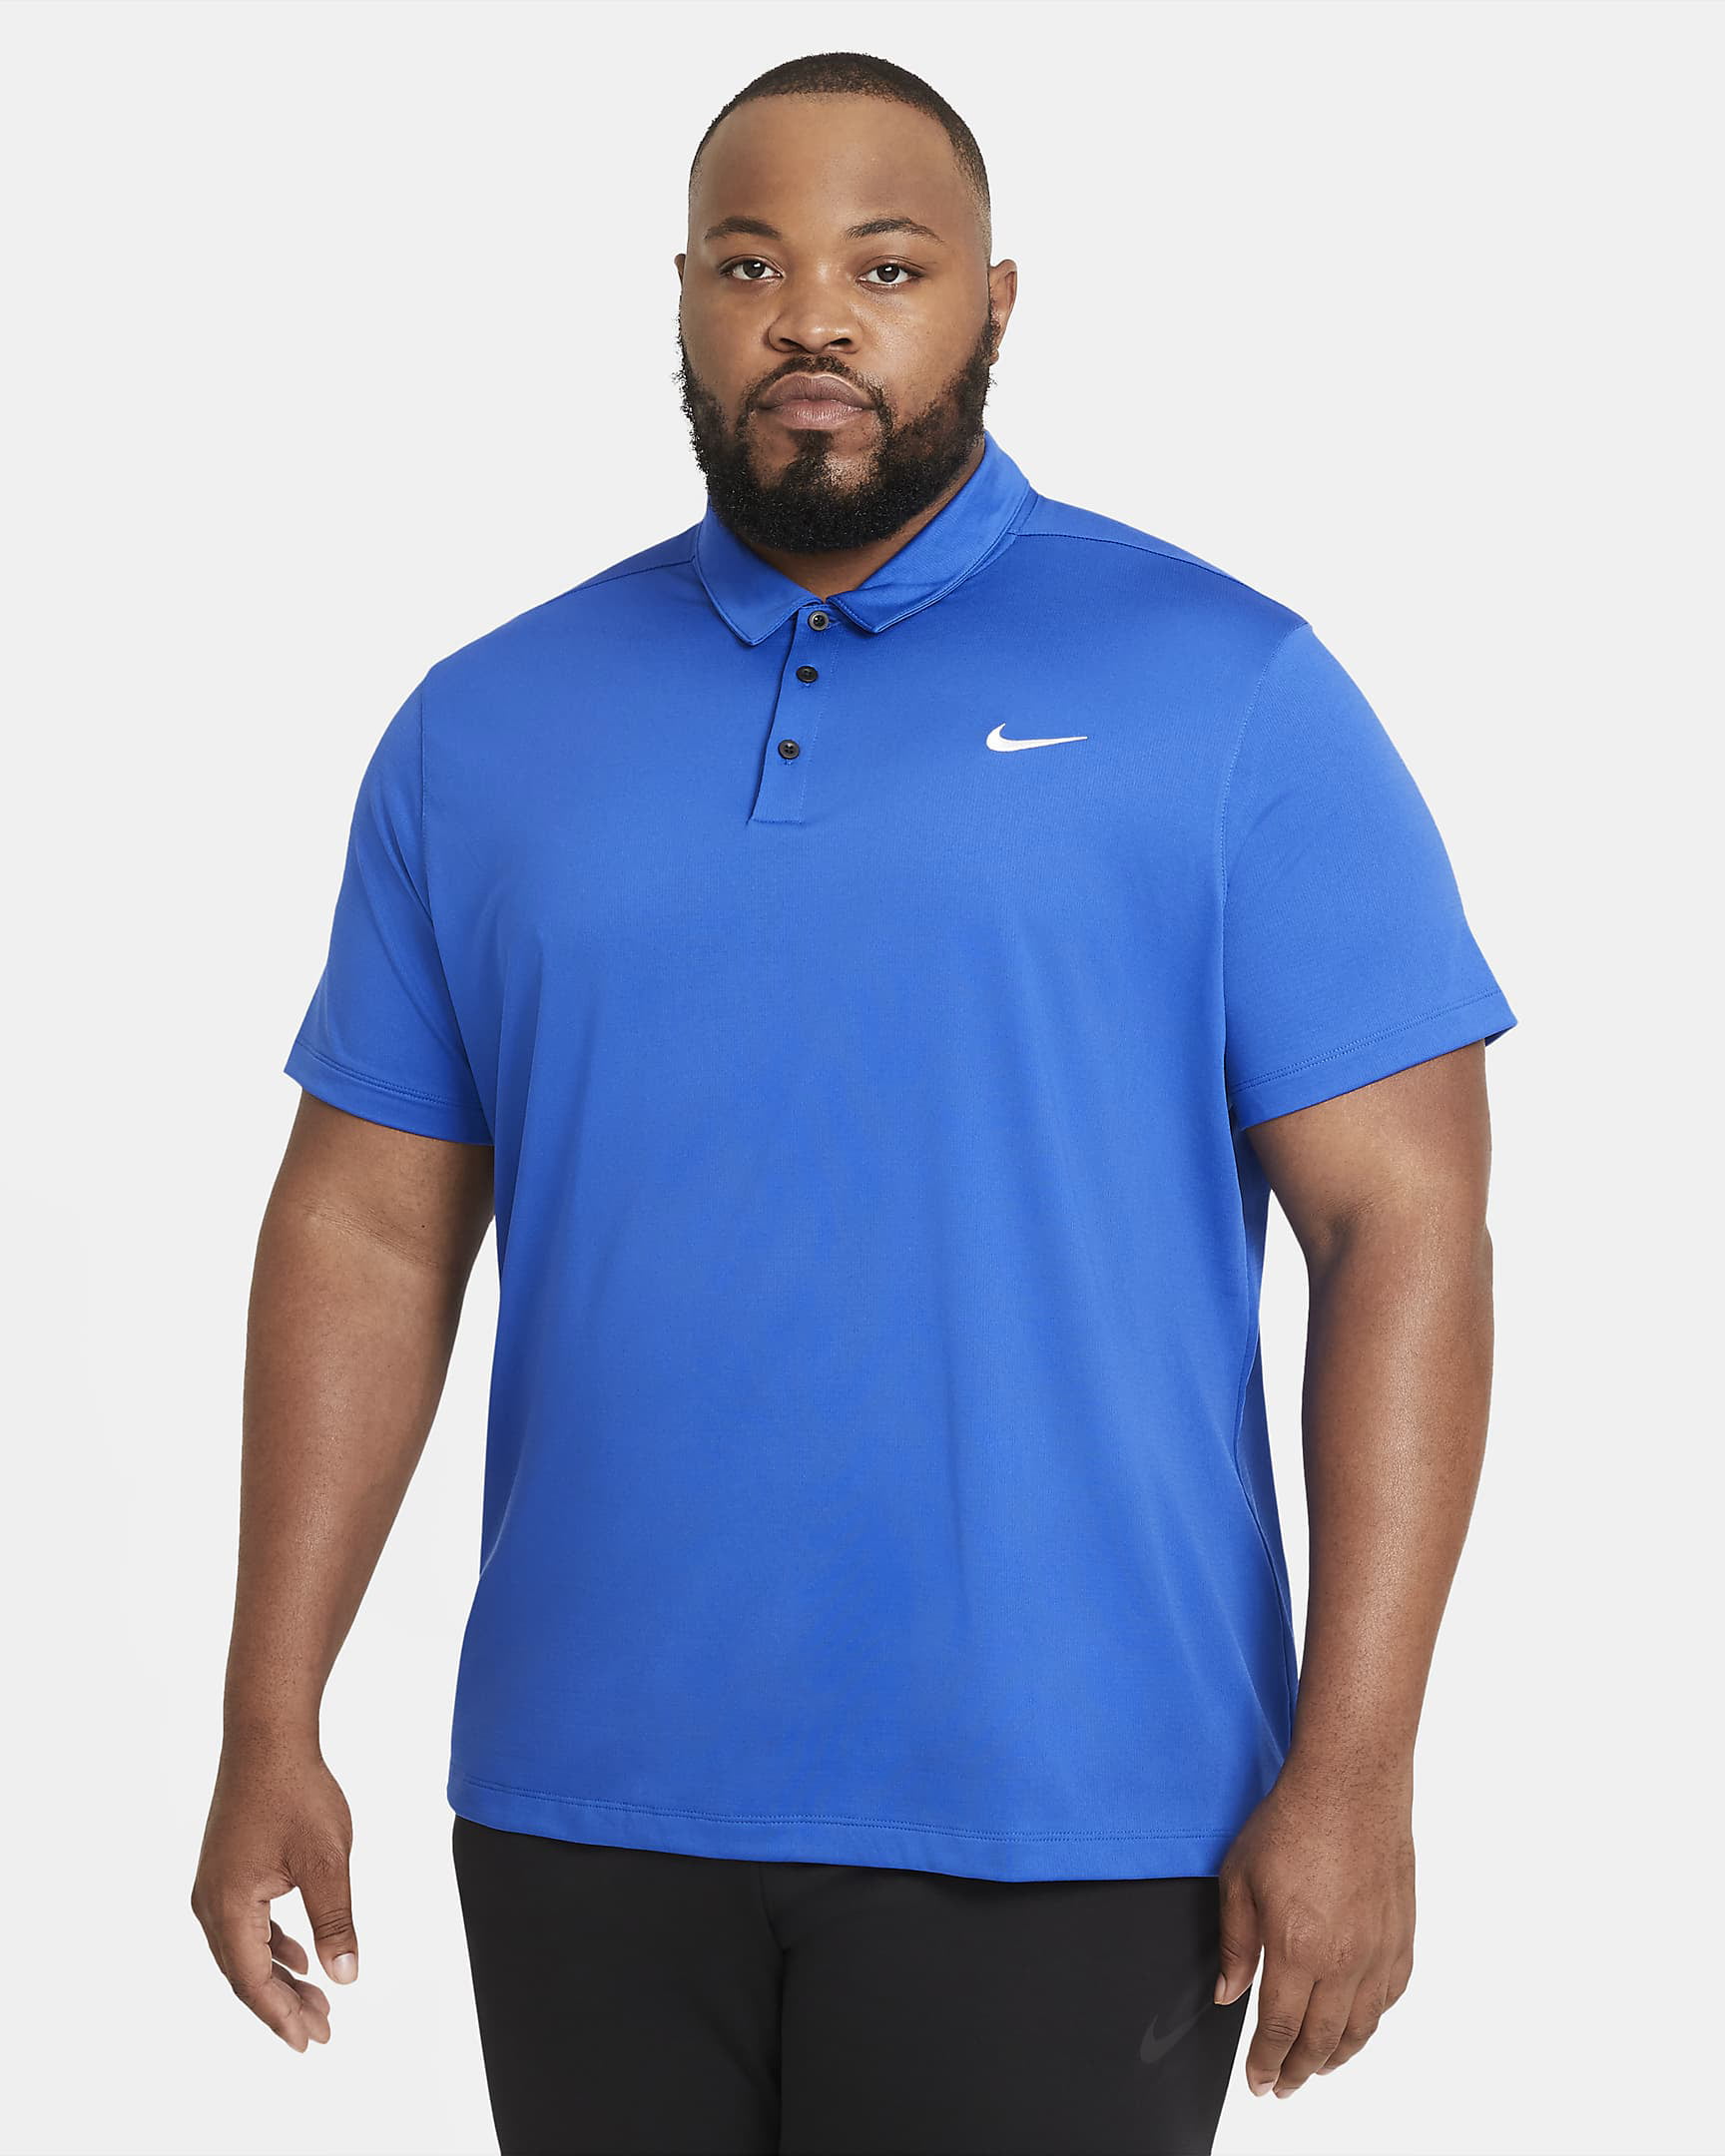 NIKE Men's Sleeve Polo Shirt, Royal Blue, XXL - Walmart.com